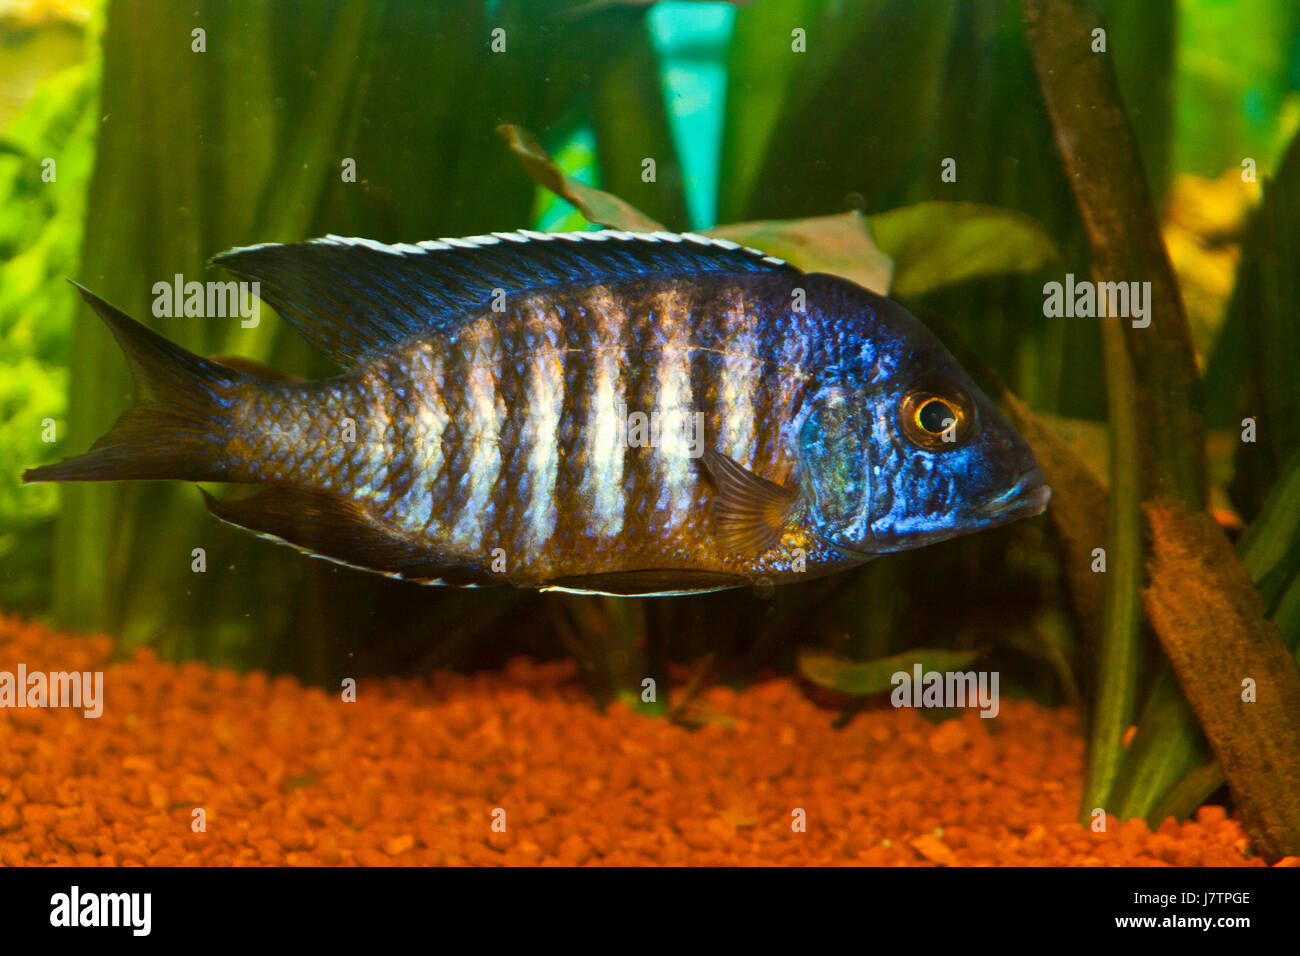 malawi fish aulonocara Stock Photo